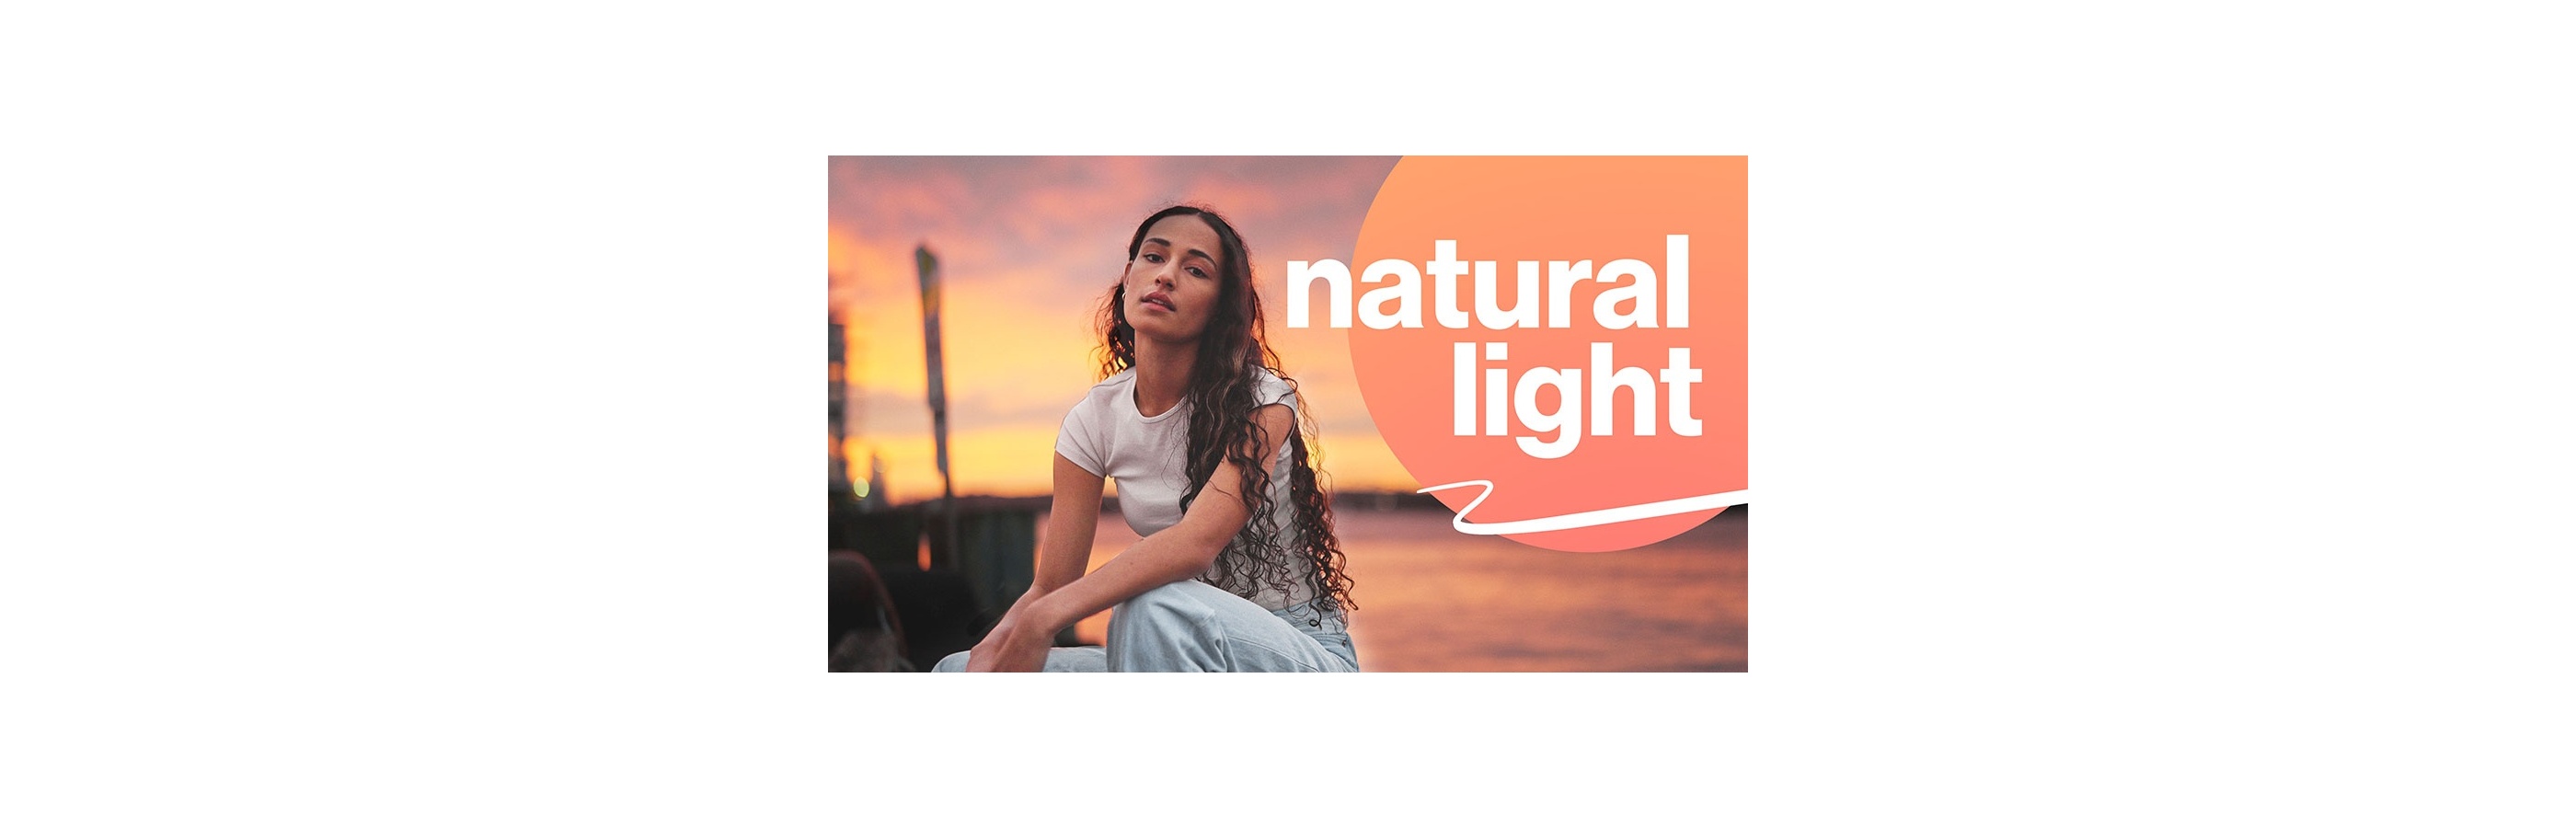 Shooting Video Portraits With Natural Lighting